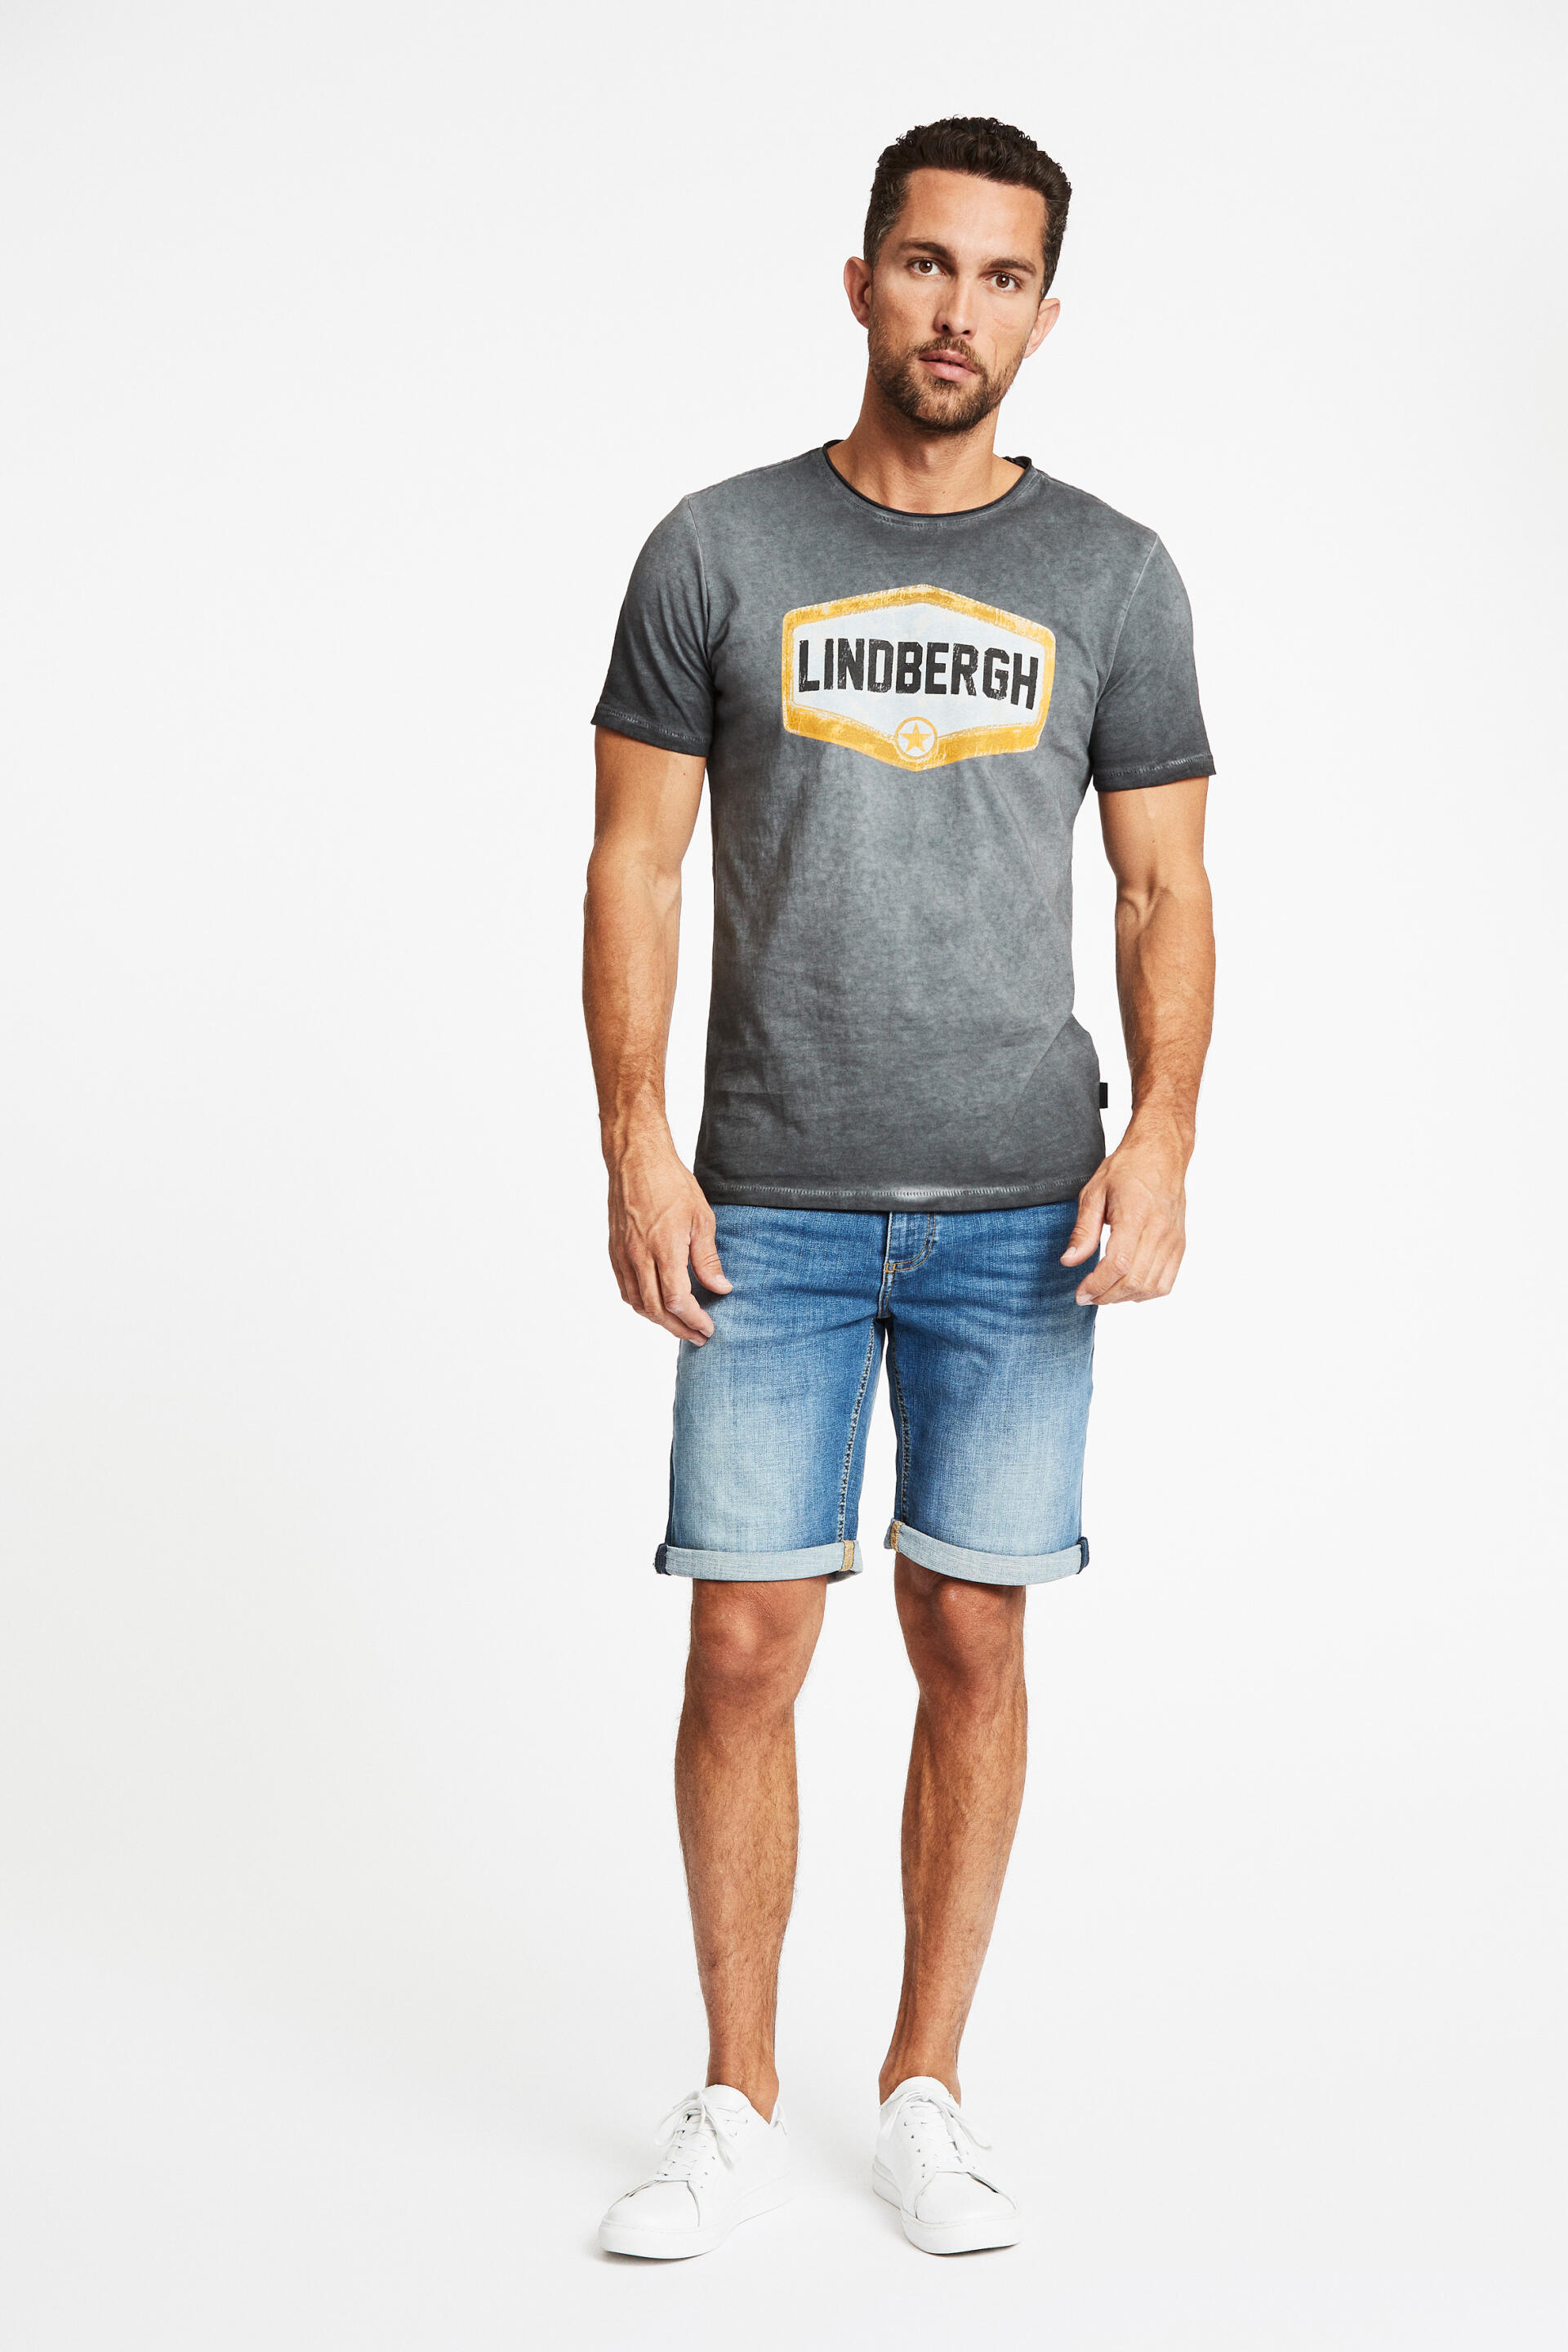 Lindbergh  T-shirt 30-423010